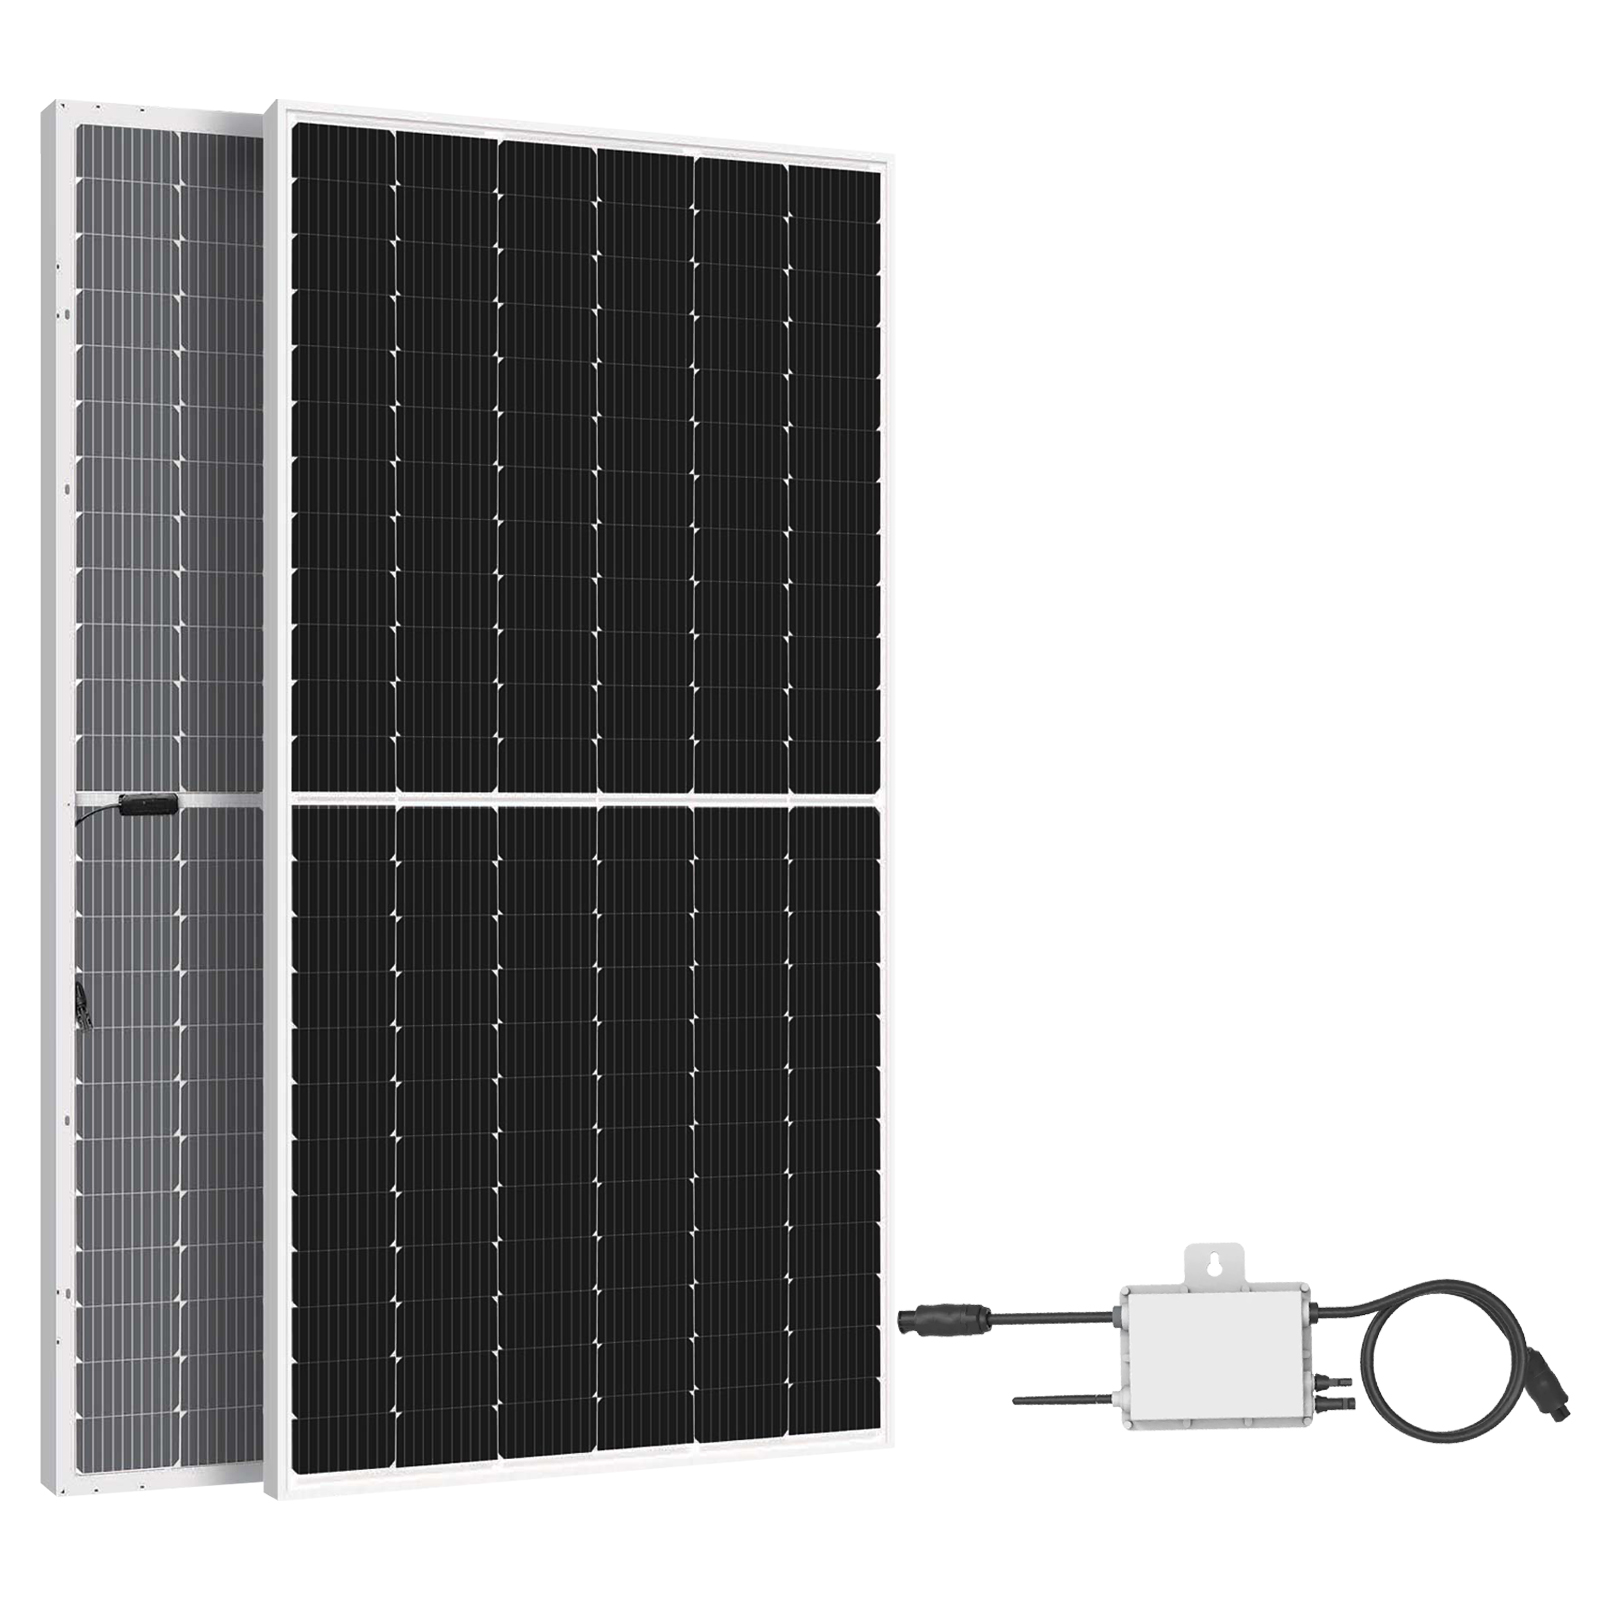 Solar Pv Balkonkraftwerk Komplettset Mit W Bifazial Solarmodul My Xxx